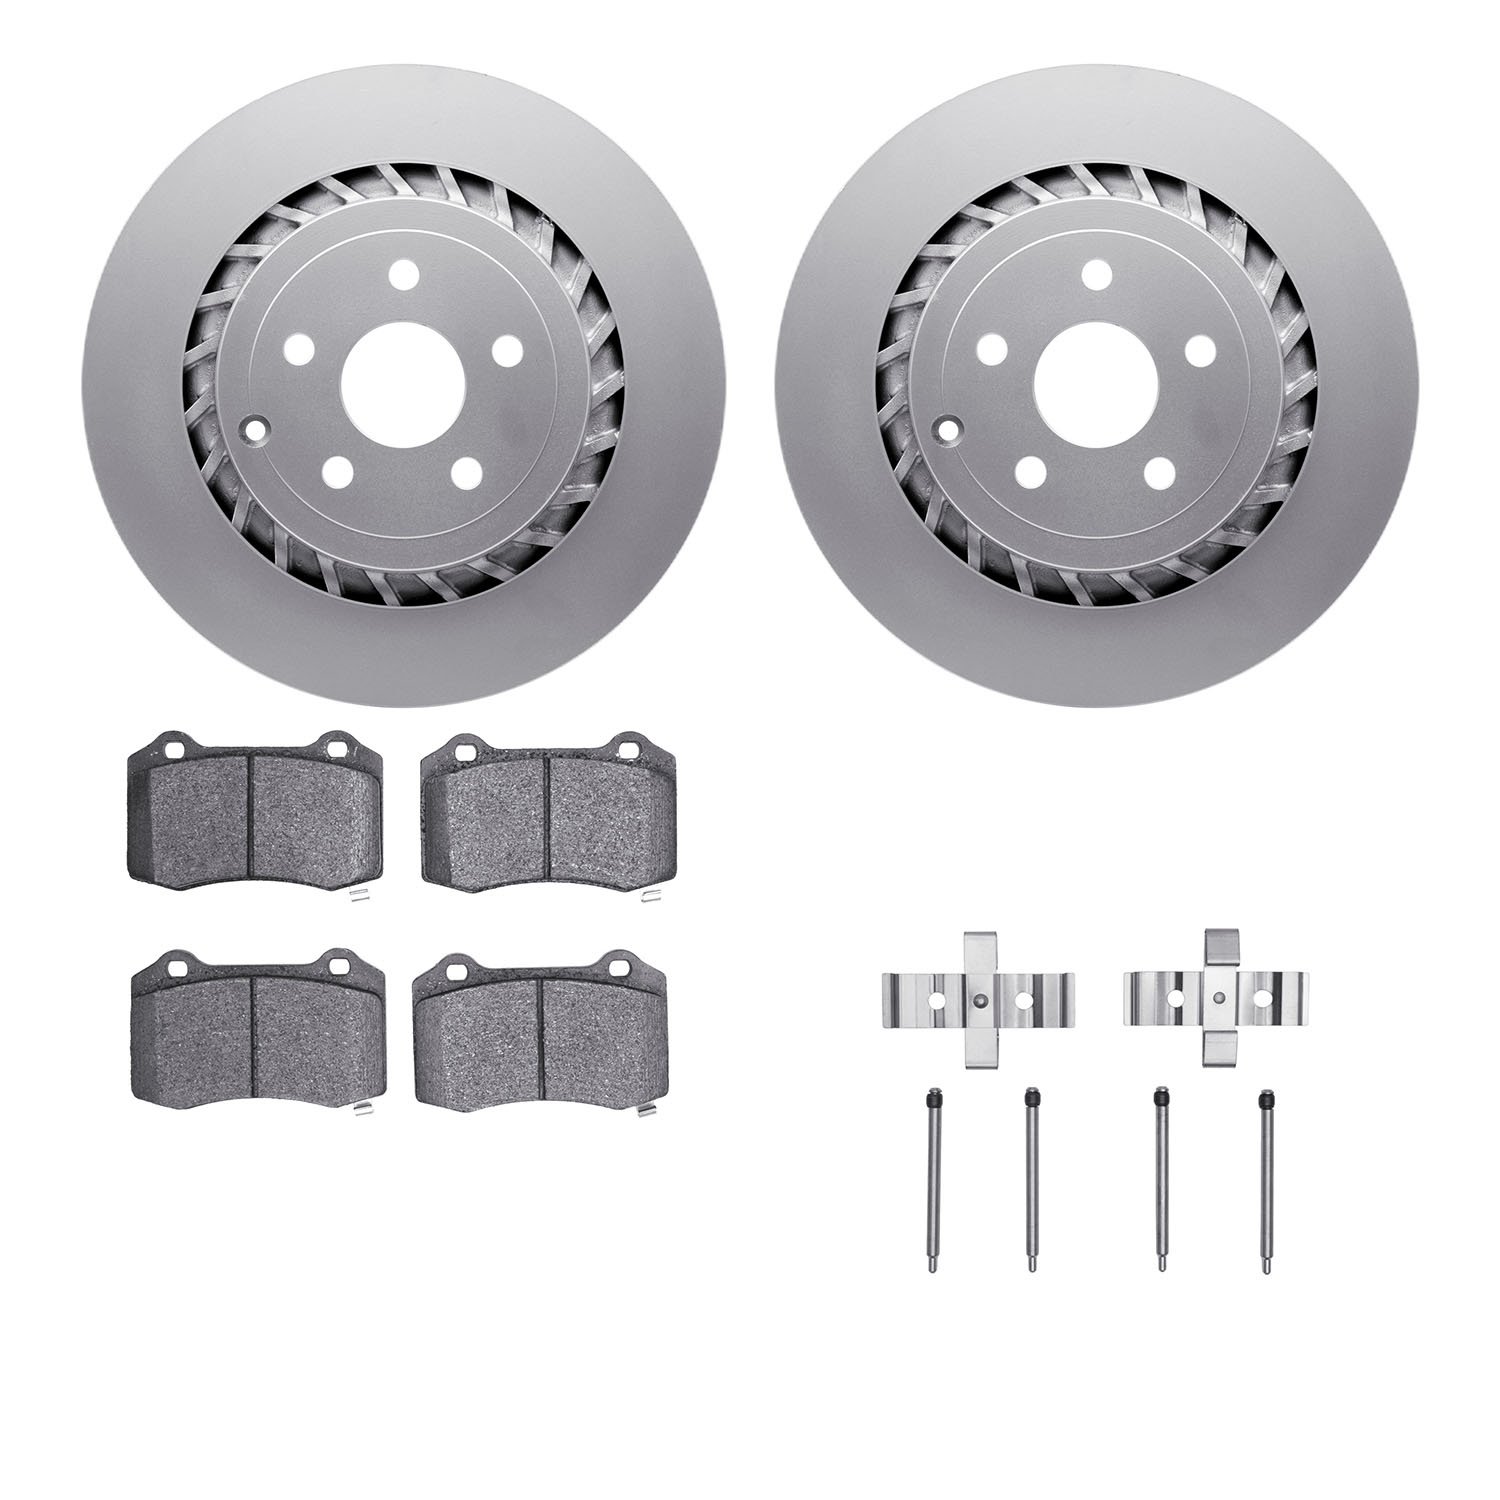 4412-47004 Geospec Brake Rotors with Ultimate-Duty Brake Pads & Hardware, 2015-2017 GM, Position: Rear